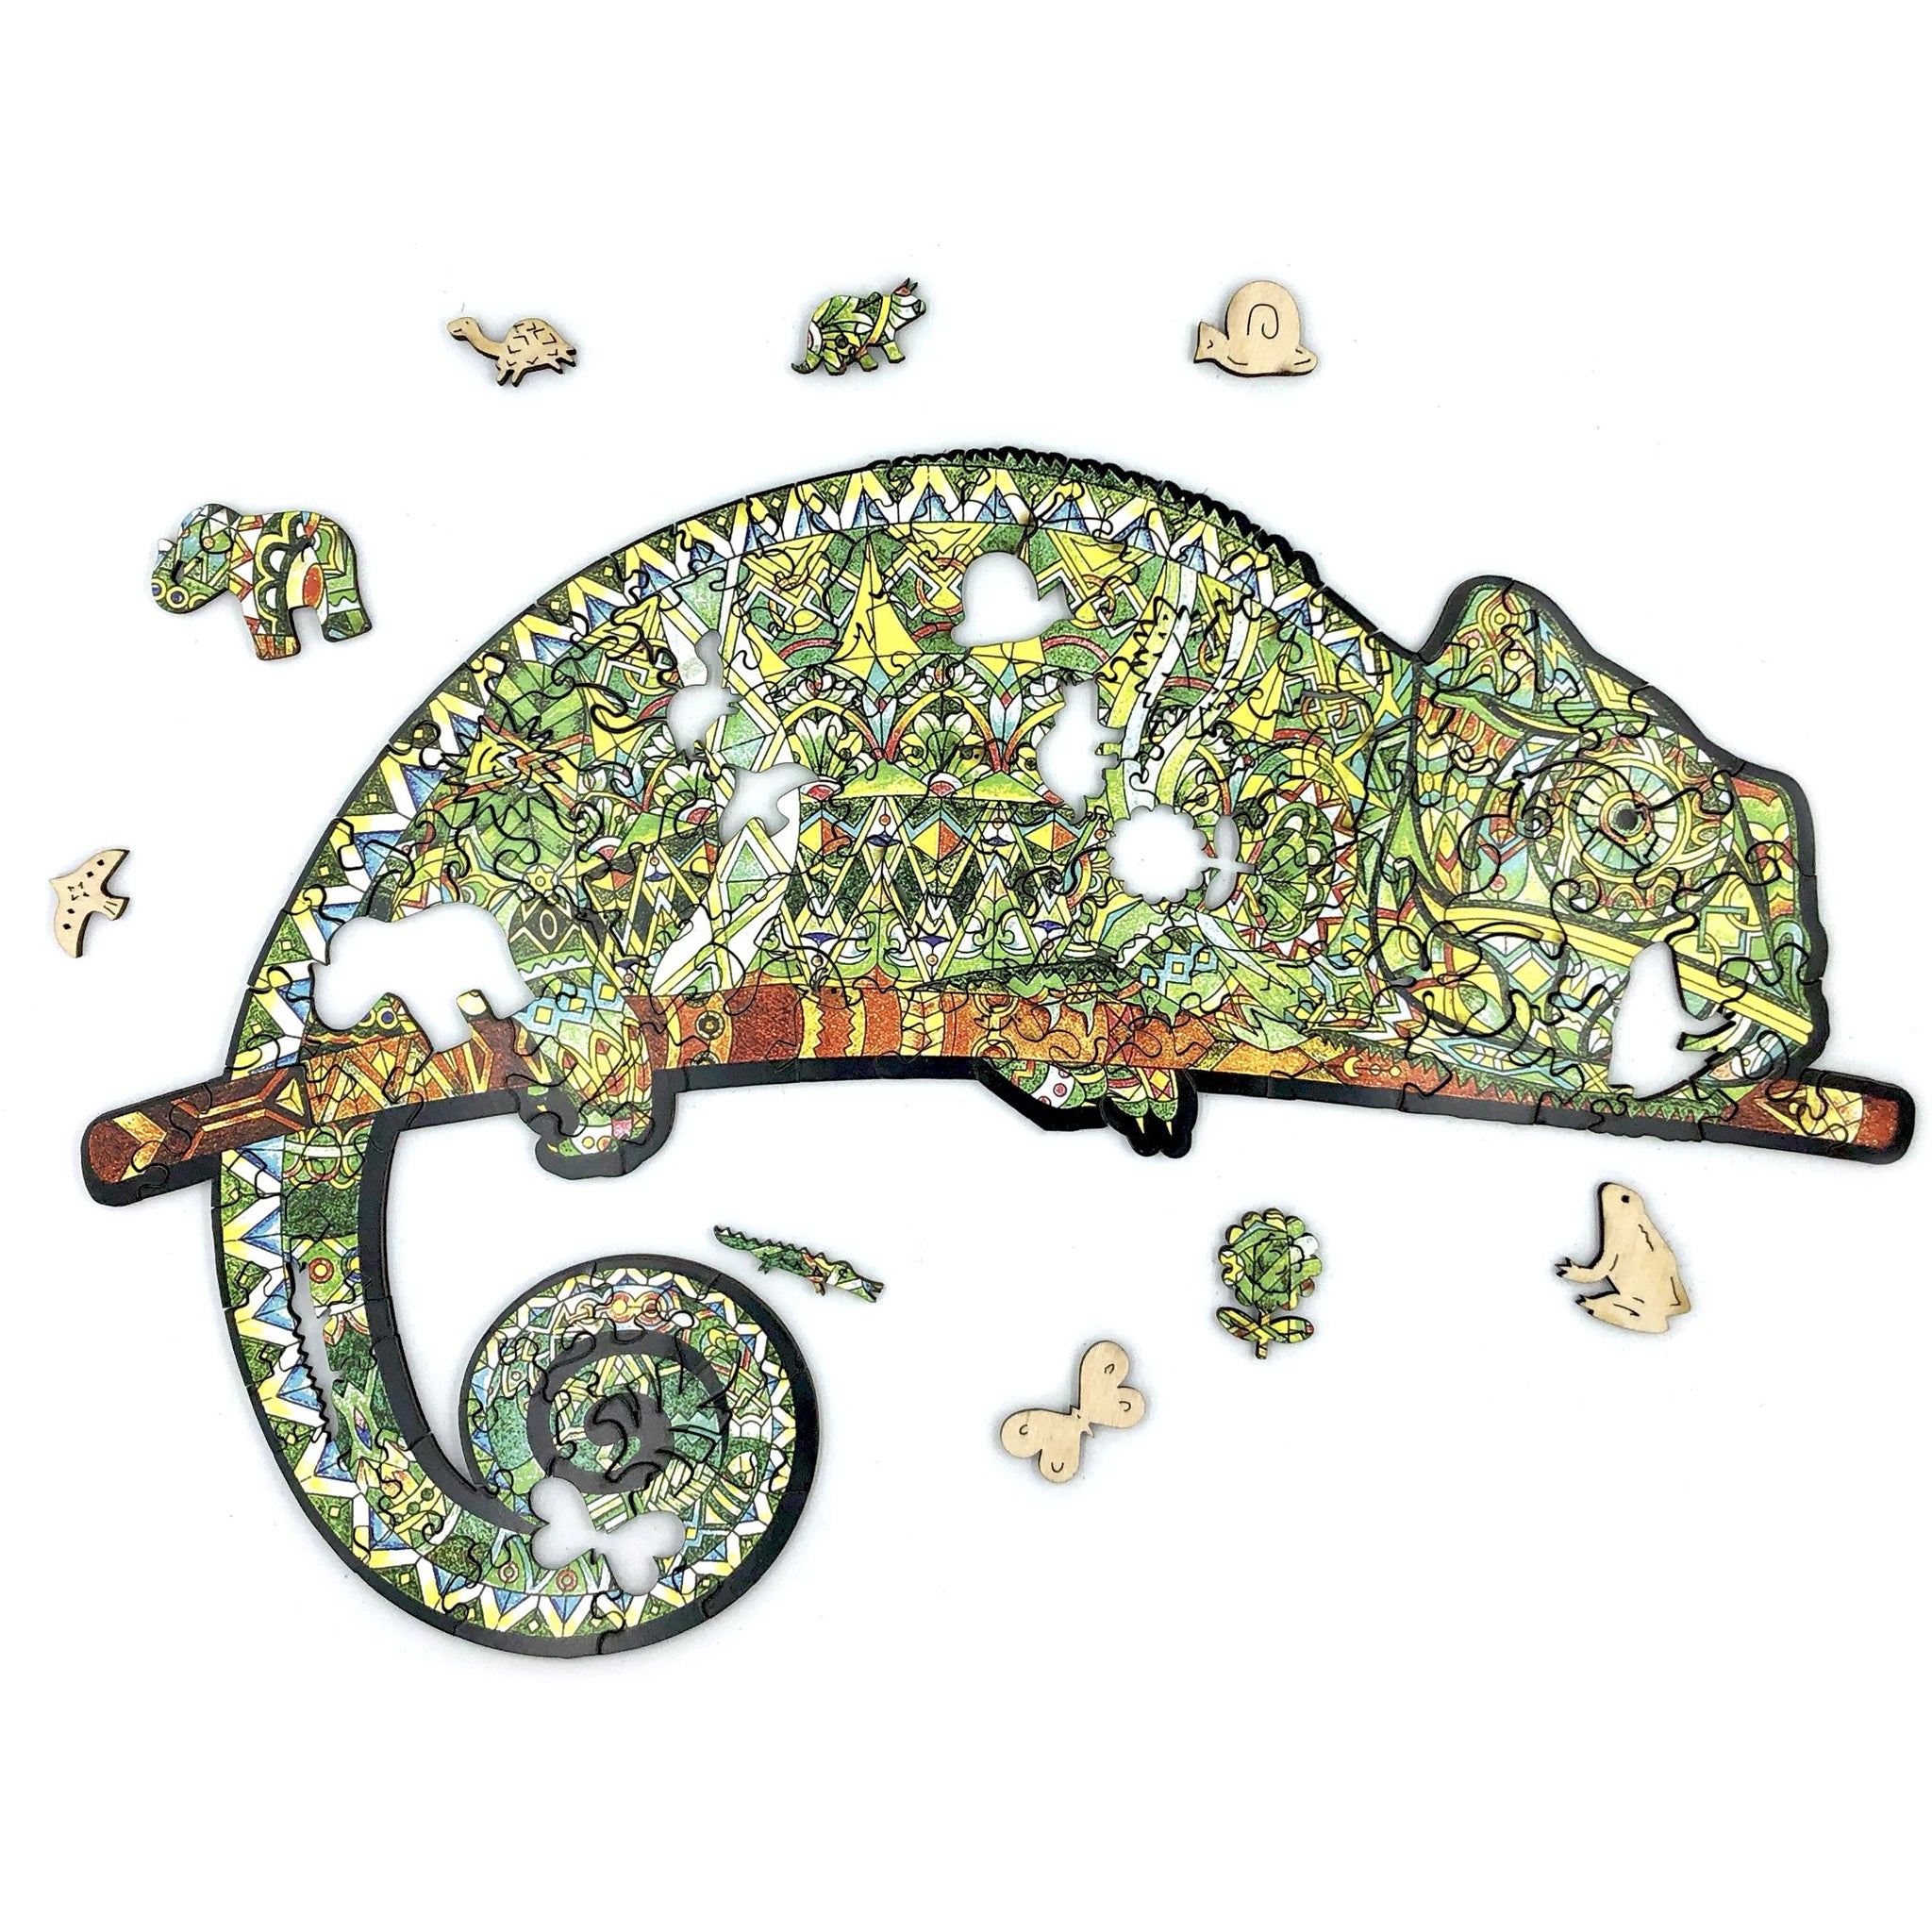 Wooden jigsaw puzzle "Lurking Chameleon"